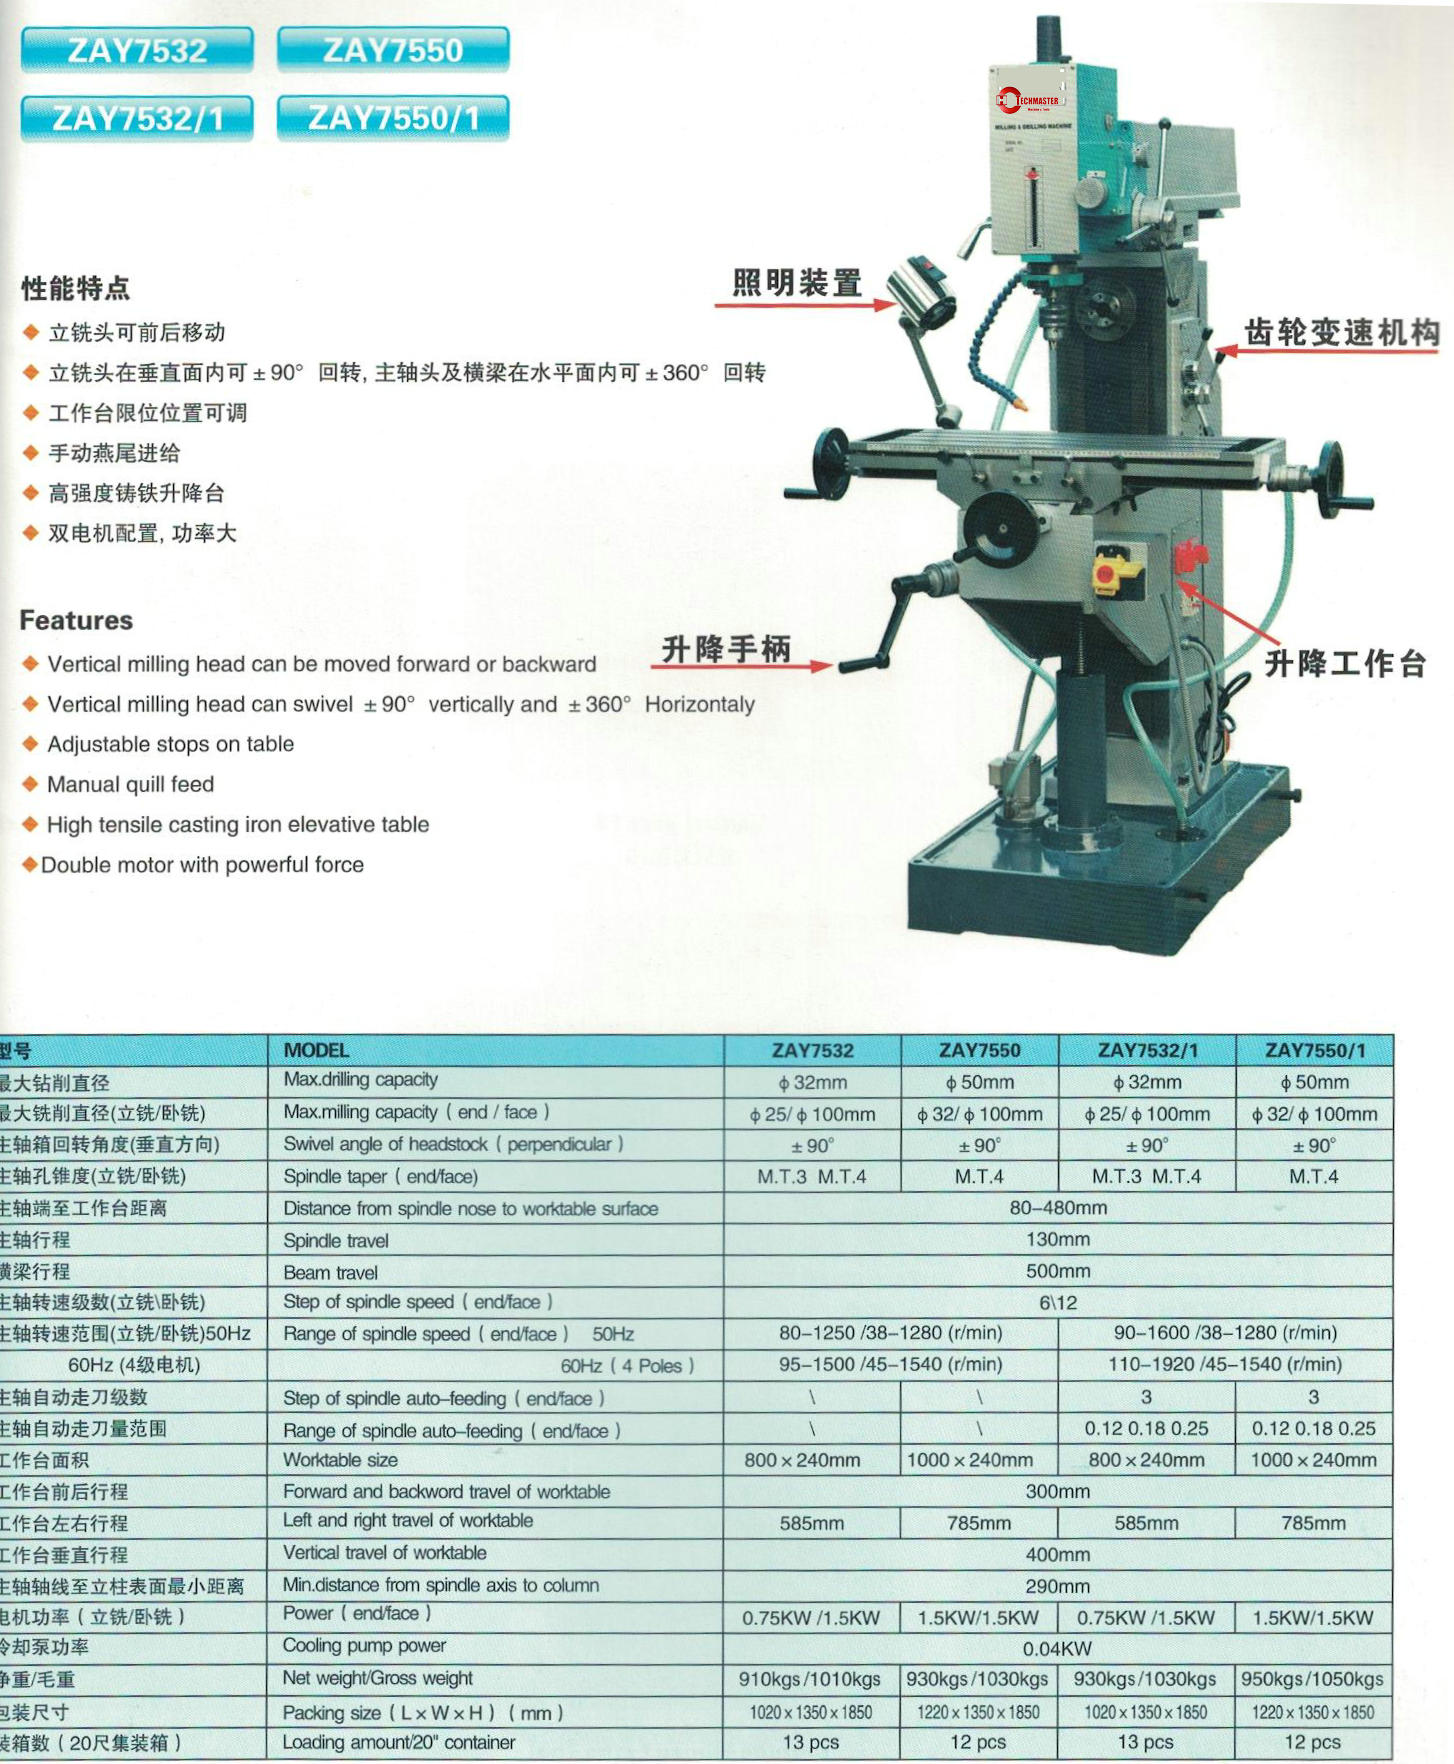 Vertical &Horizontal milling head Drilling Milling Machine ZAY7532/1-- -ZAY7550/1